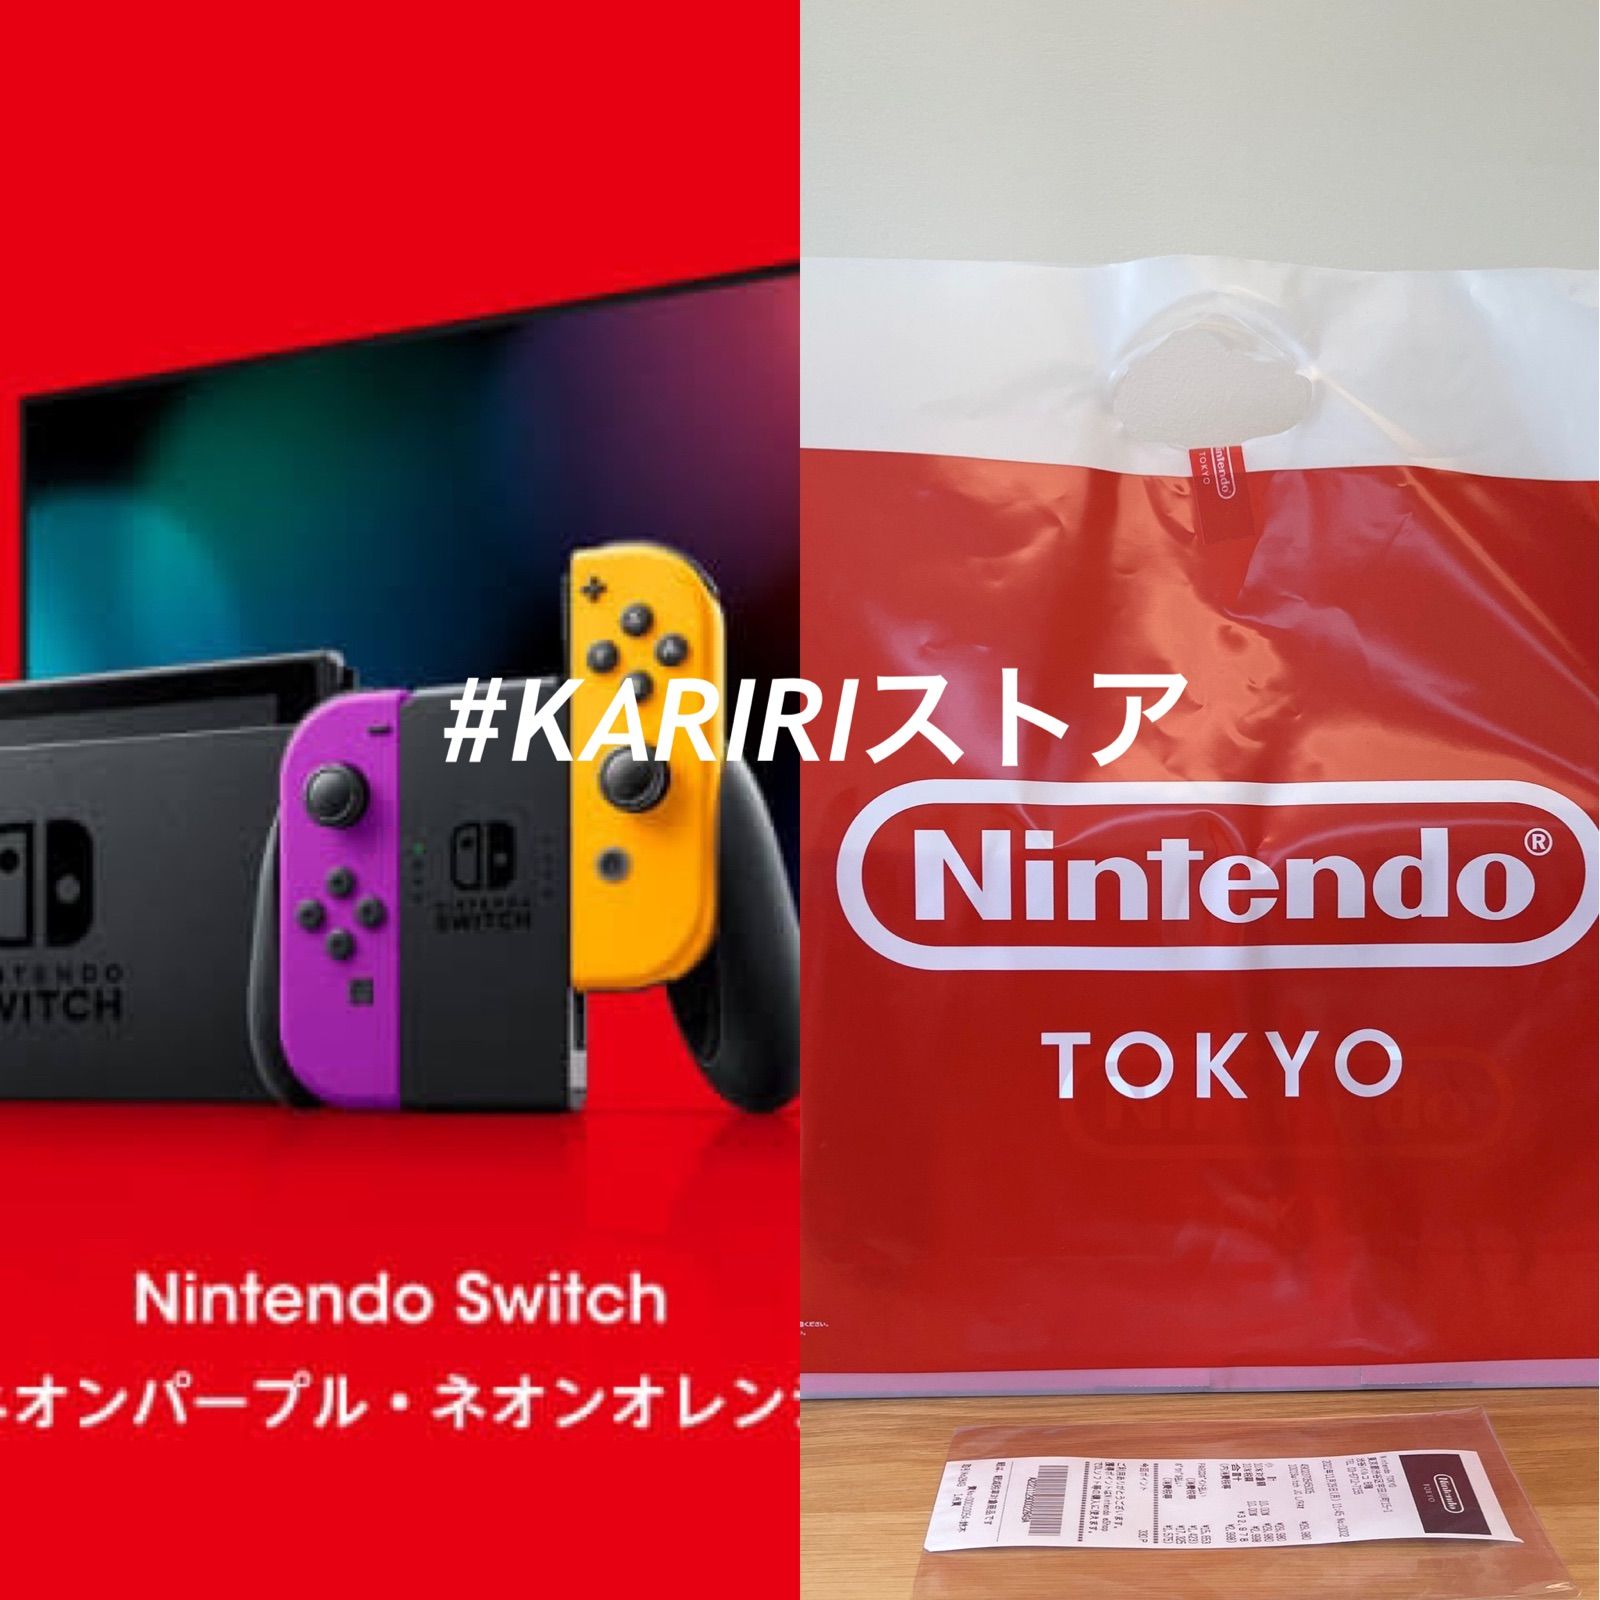 Nintendo Switch 本体 TOKYO限定カラー パープル オレンジニンテンドー ...